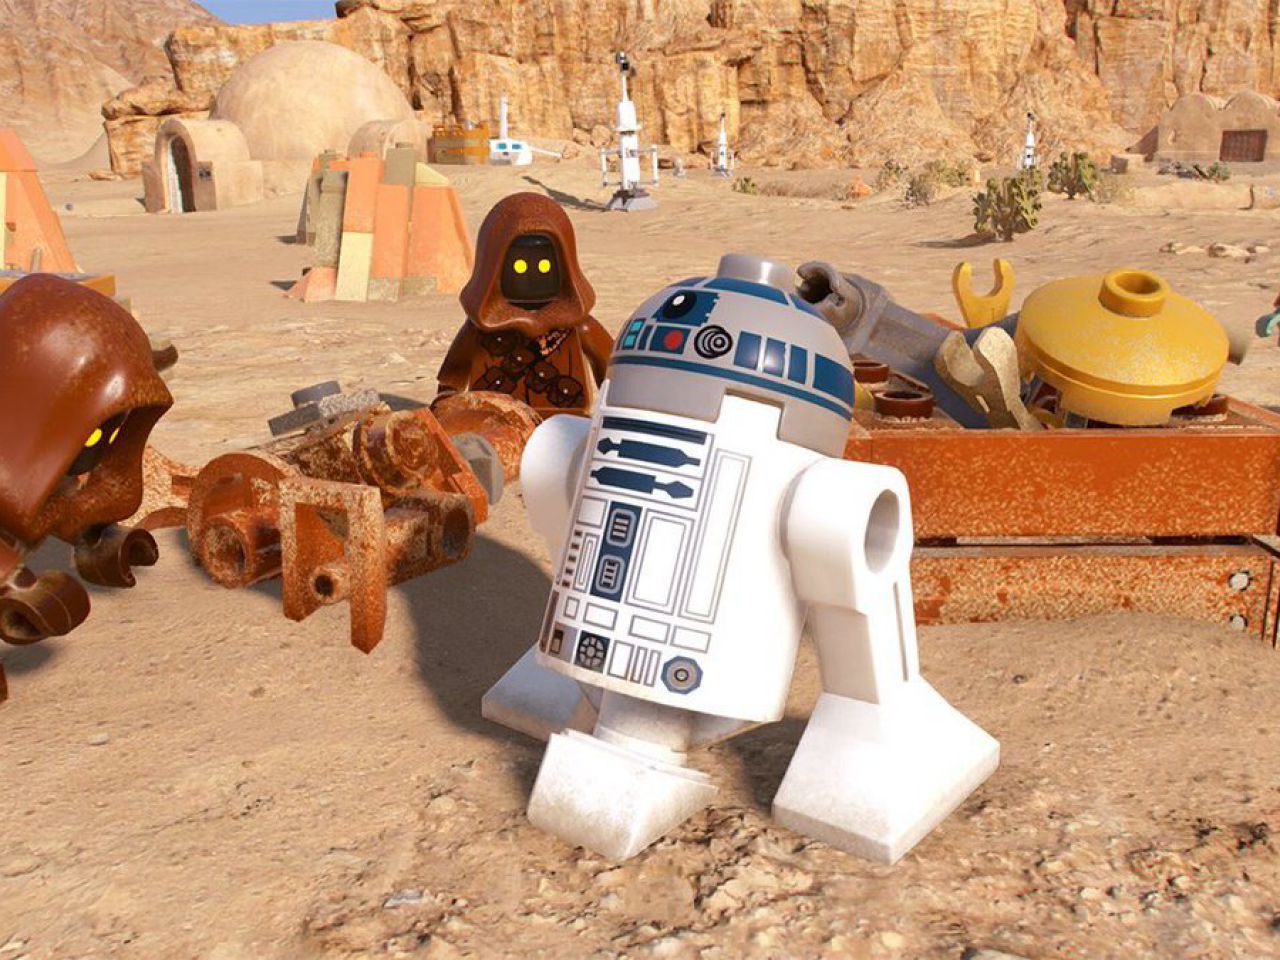 LEGO Star Wars: The Skywalker Saga